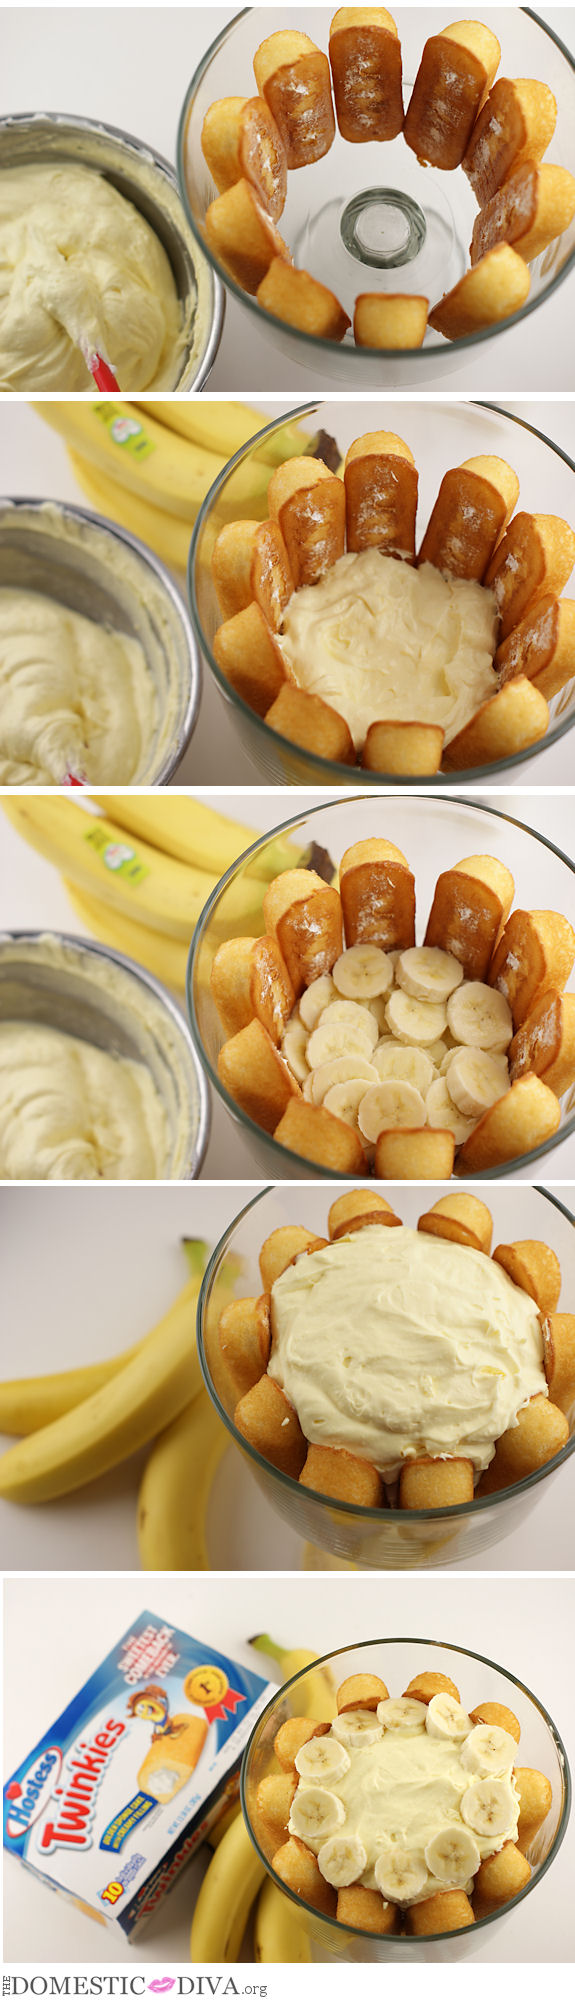 Hostess Twinkies are Back! Twinkie Banana Trifle Recipe